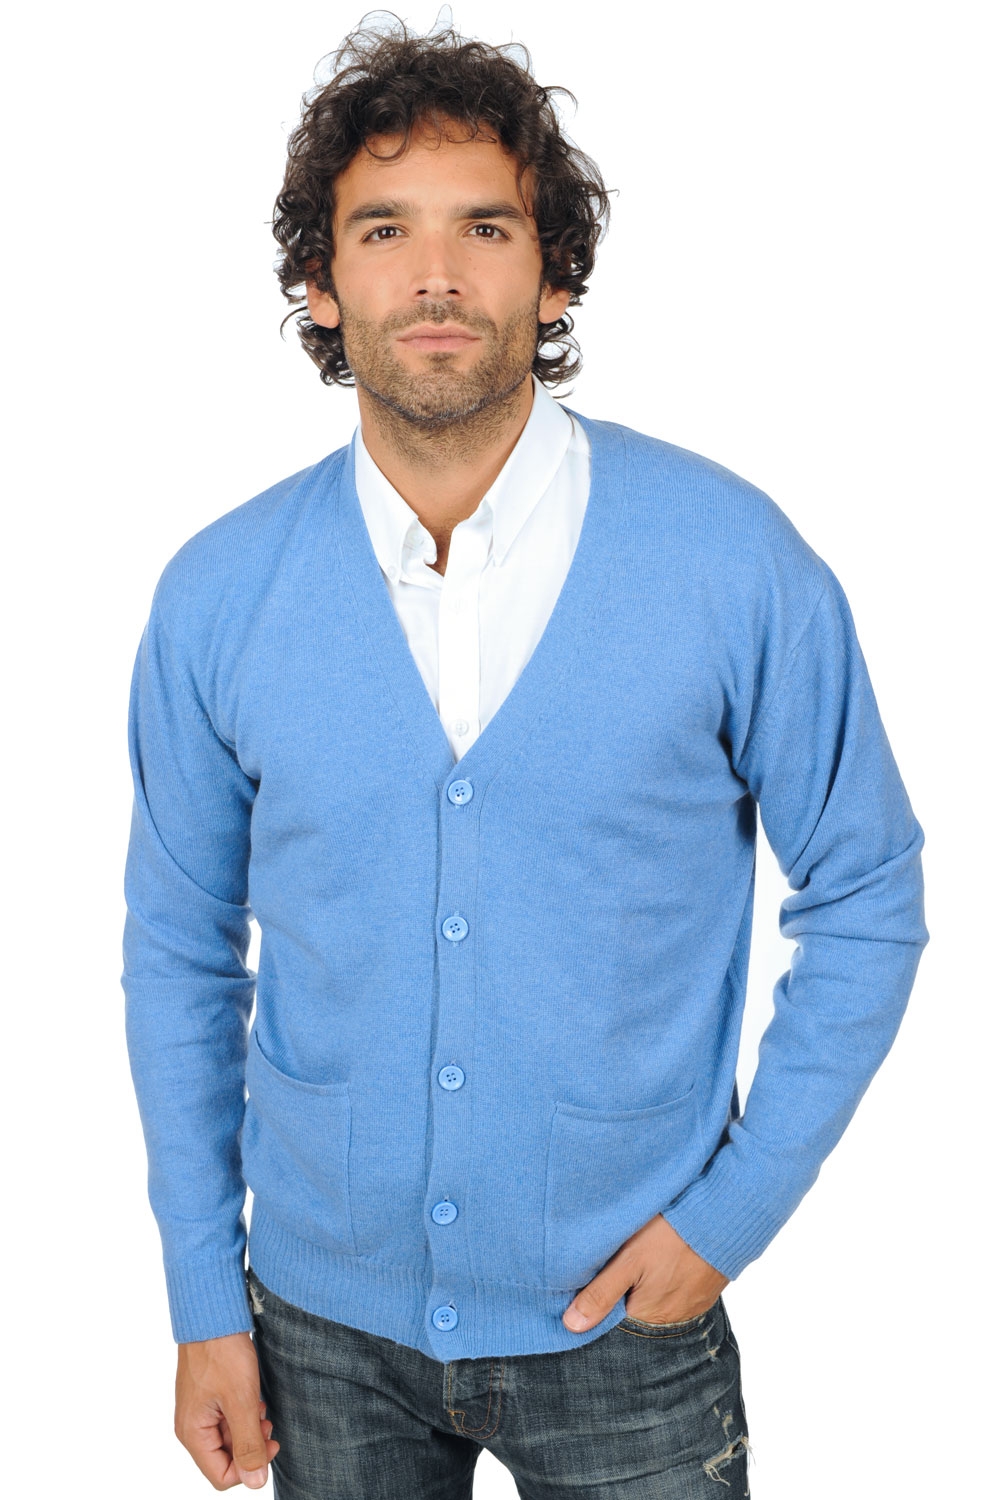 Cashmere men waistcoat sleeveless sweaters yoni blue chine s